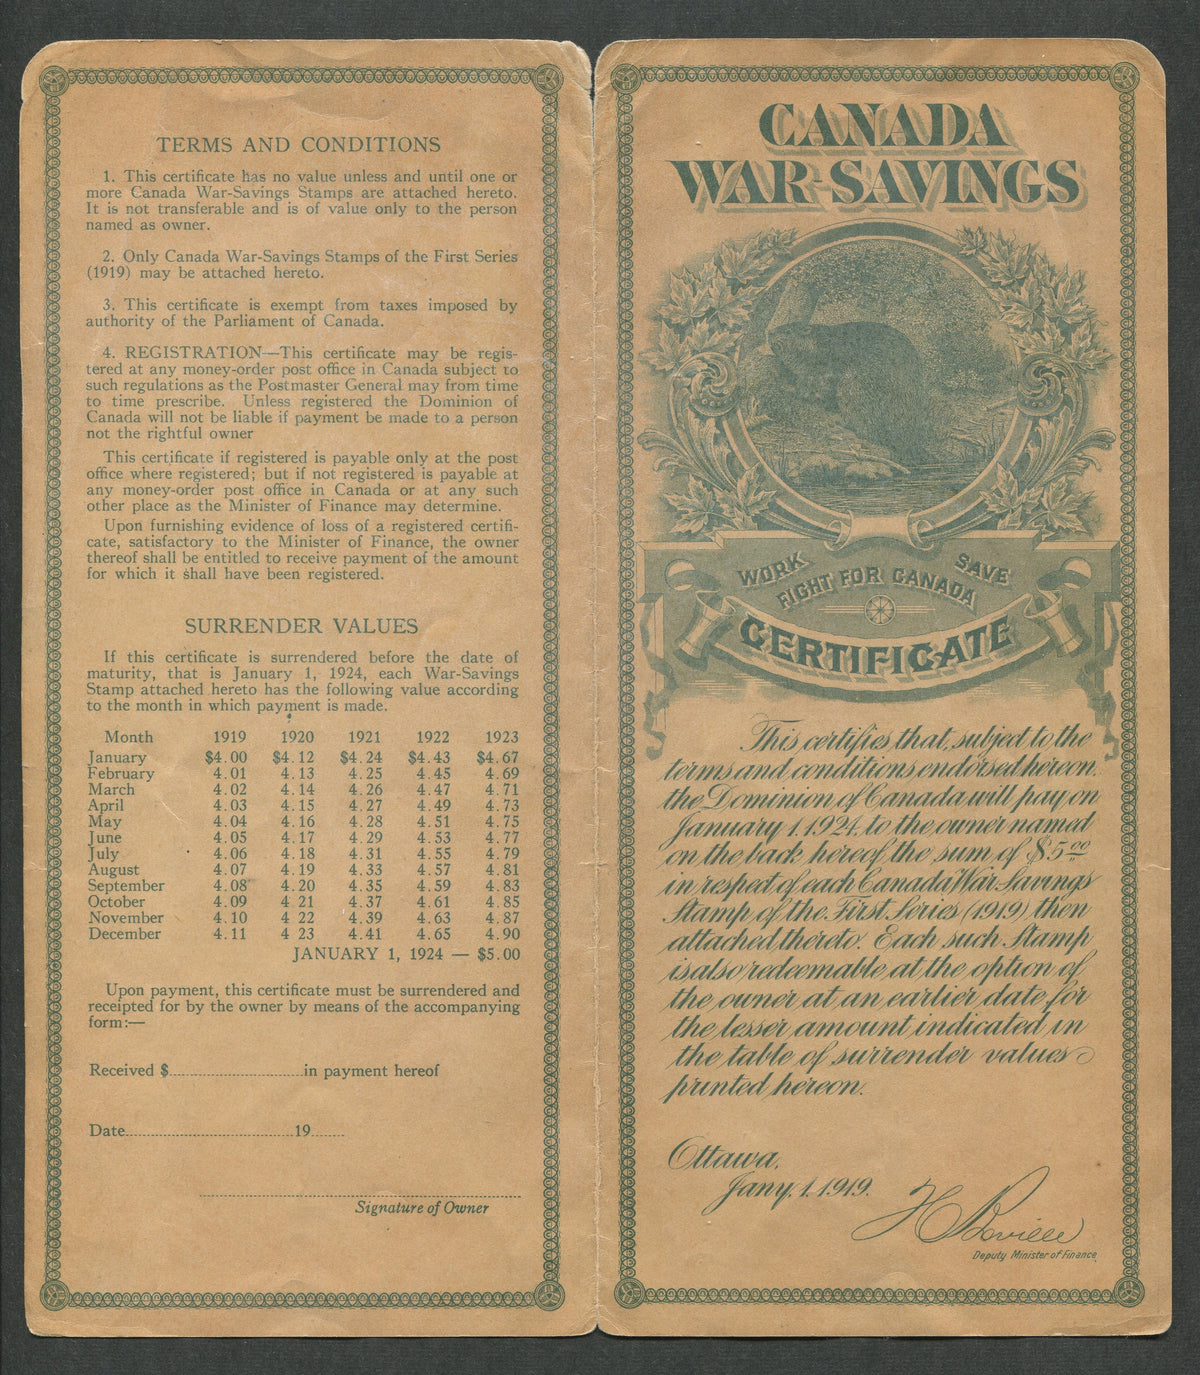 0002WS1708 - FWS2 - Used on War Savings Certificate - Deveney Stamps Ltd. Canadian Stamps